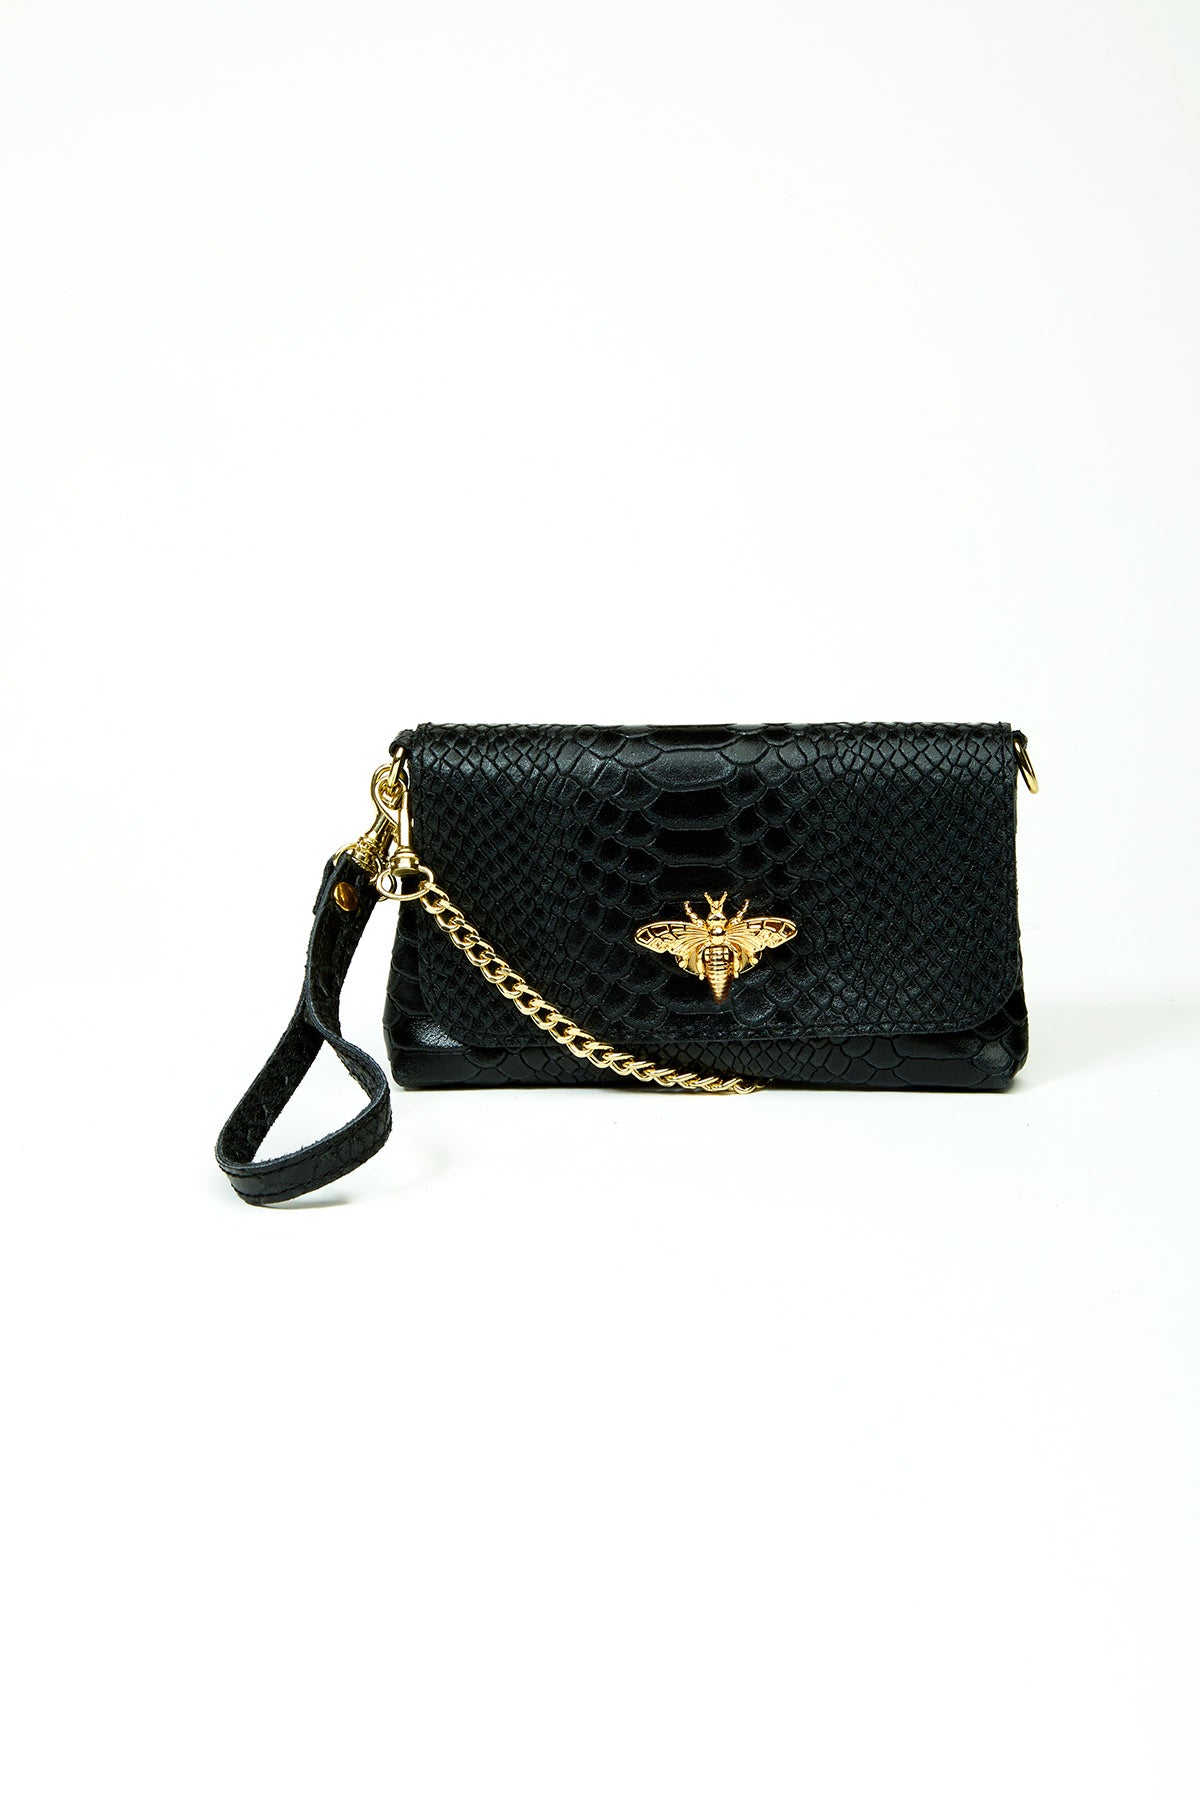 Black handbag with bee embellishment